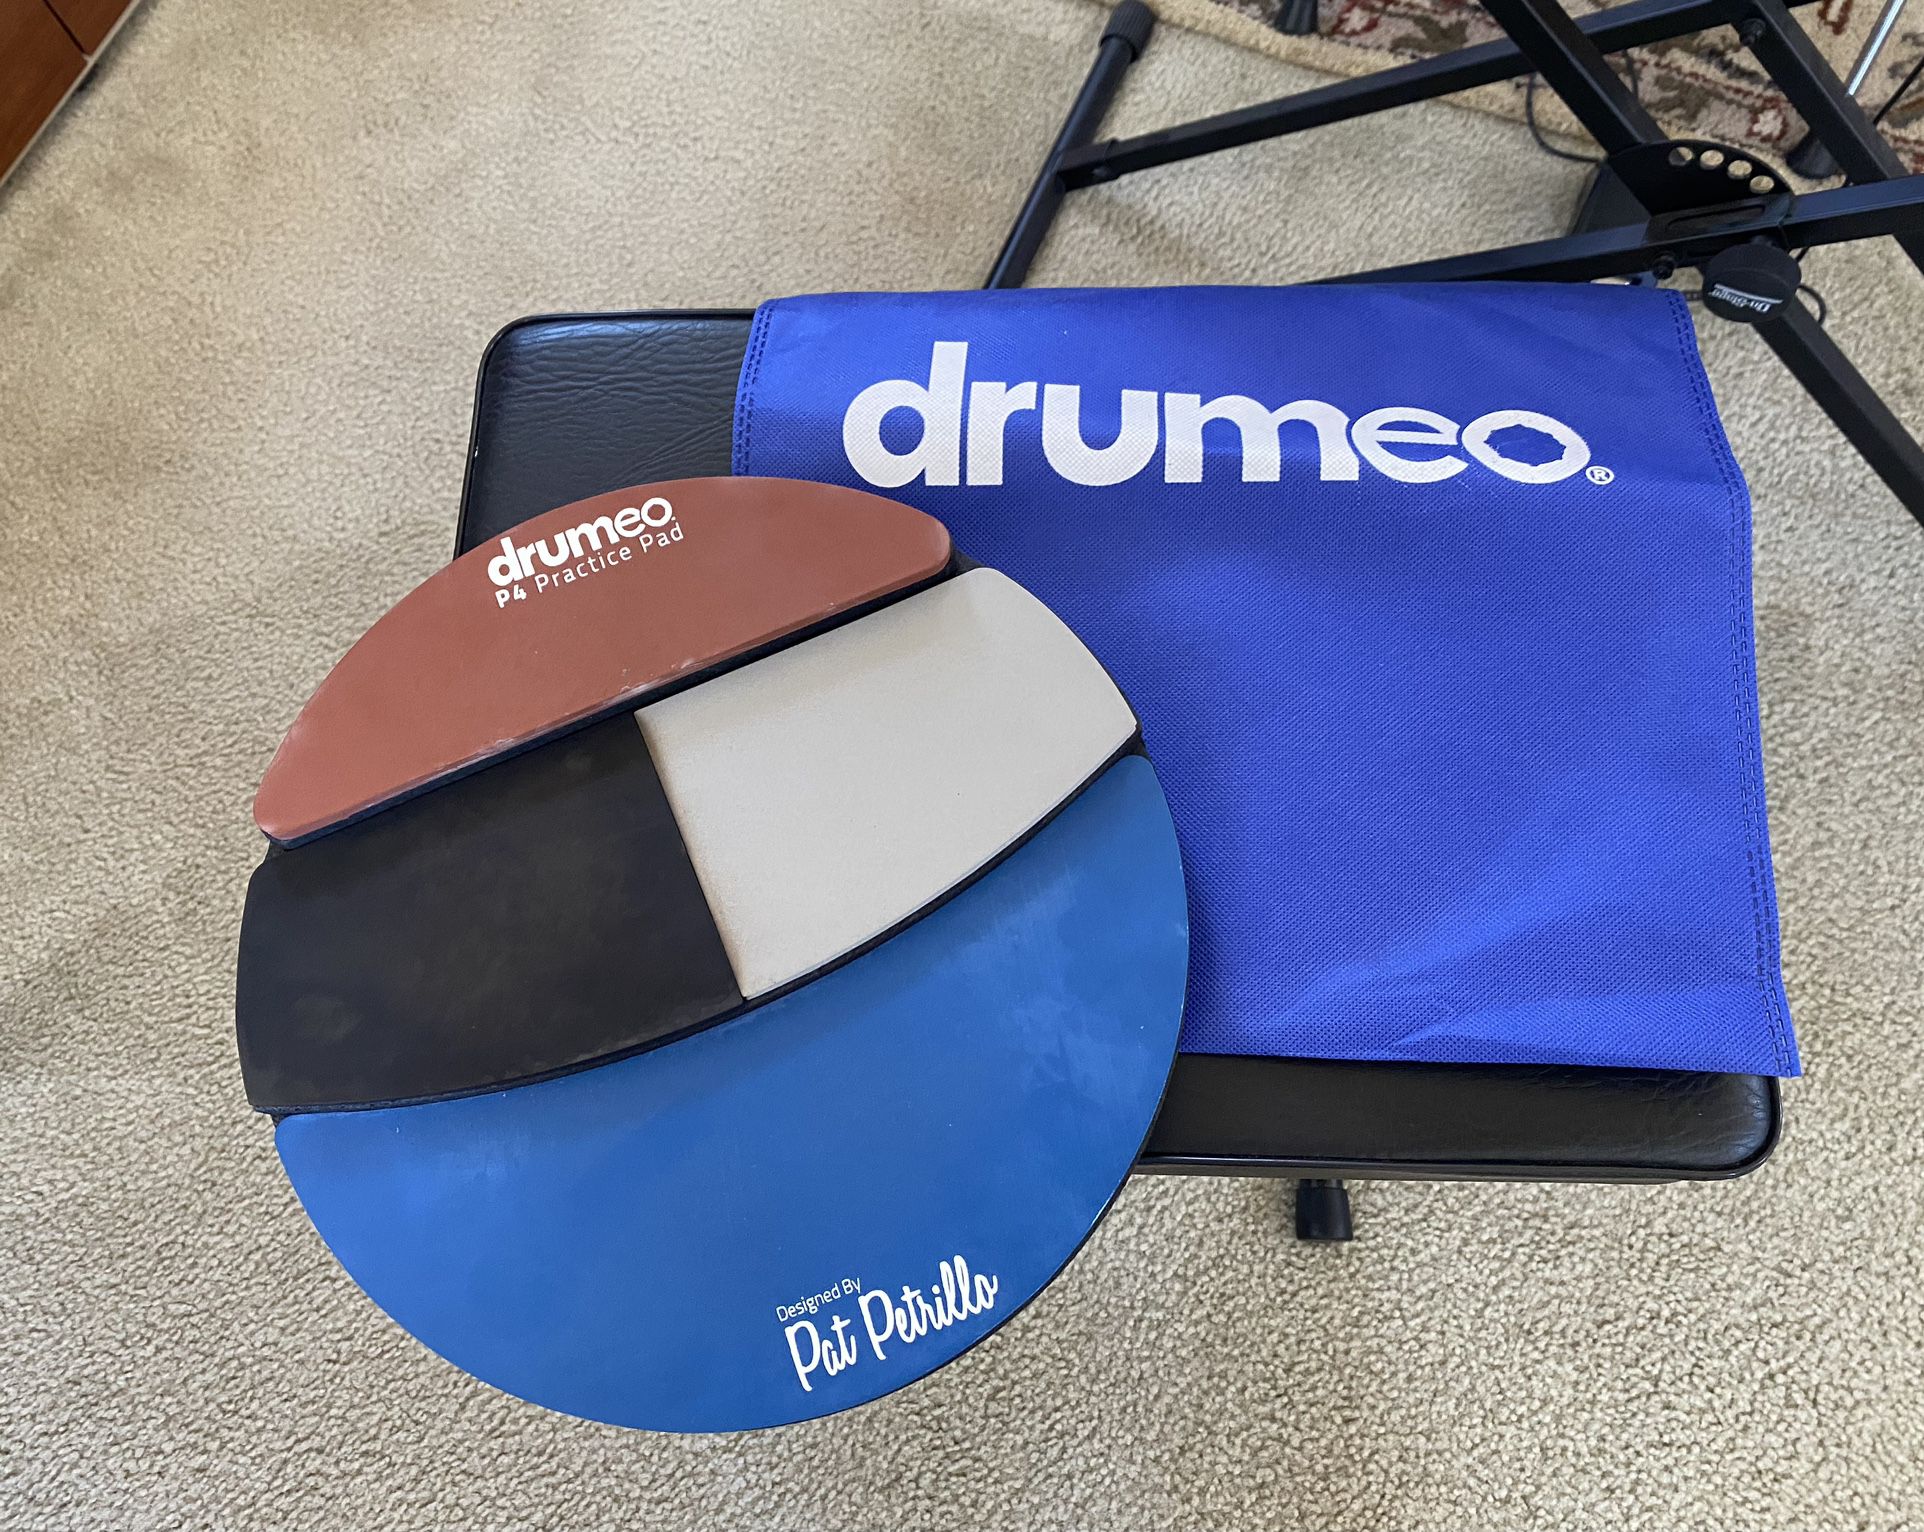 Drumeo P4 Practice Pad - Designed By Pat Petrillo